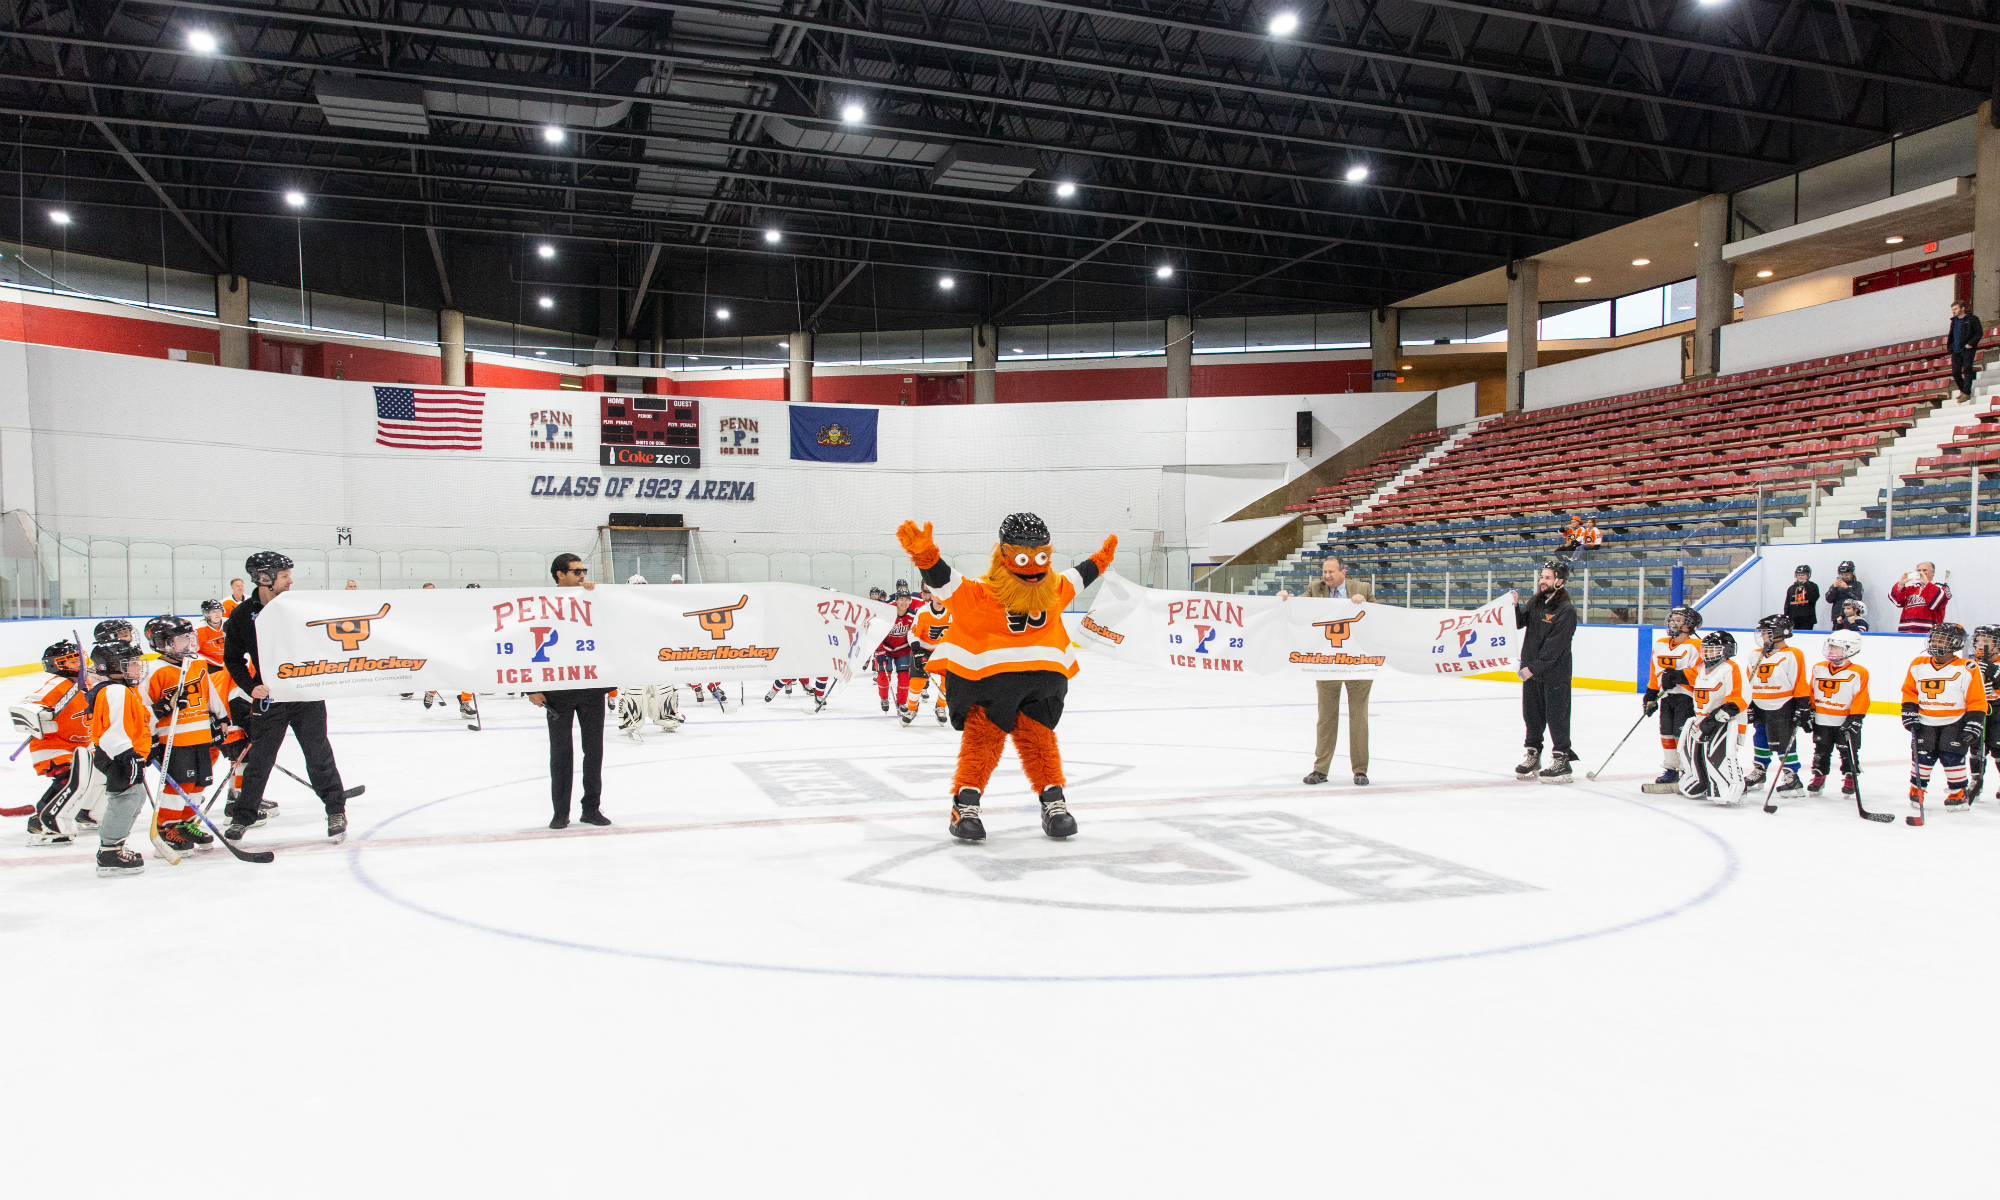 Philadelphia Flyers' mascot Gritty skates through ribbon at Penn Ice Rink.